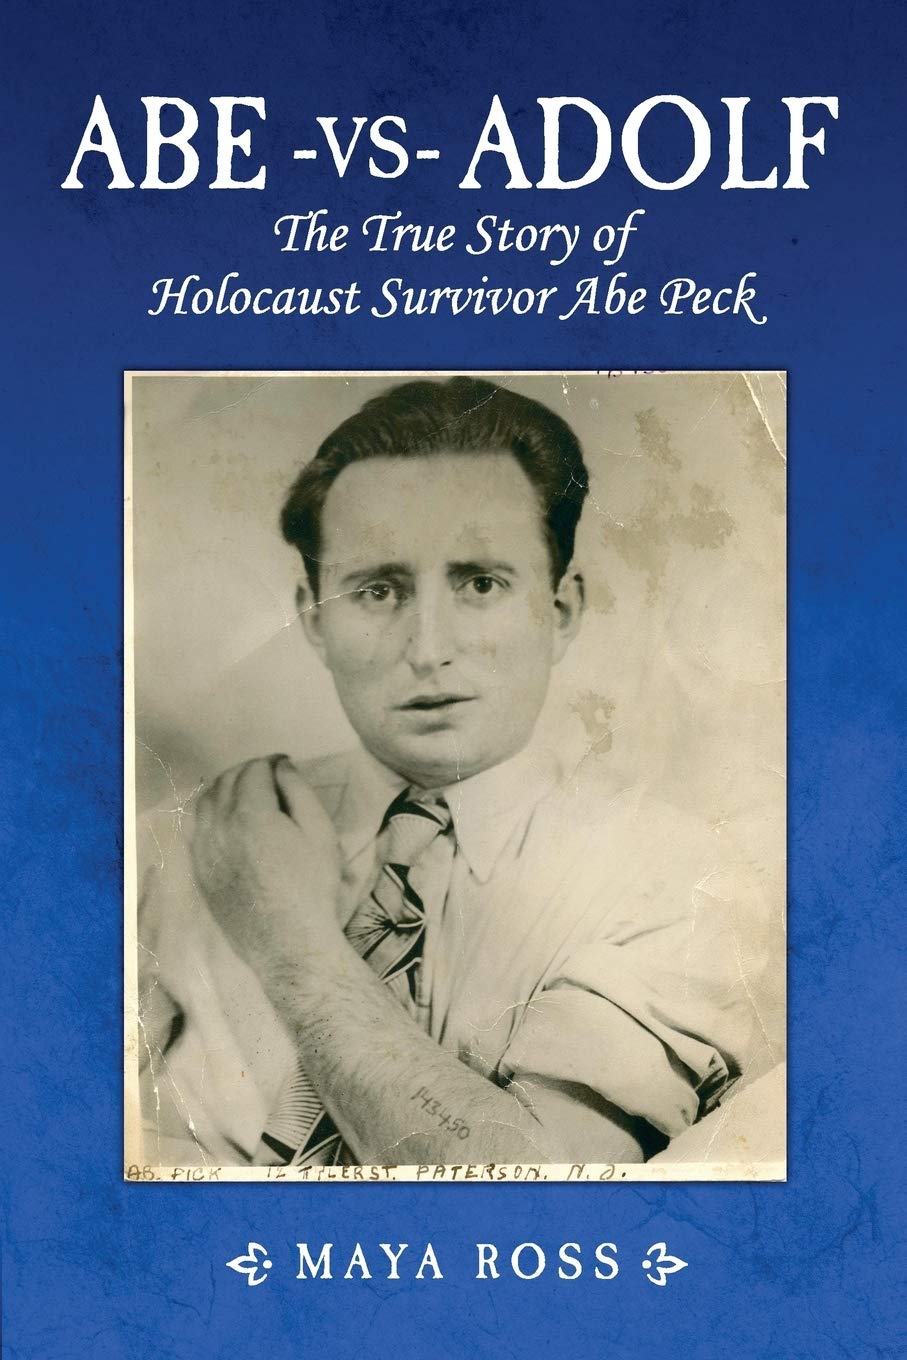 Abe vs Adolf: The True Story of Holocaust Survivor Abe Peck (Autographed Copy)